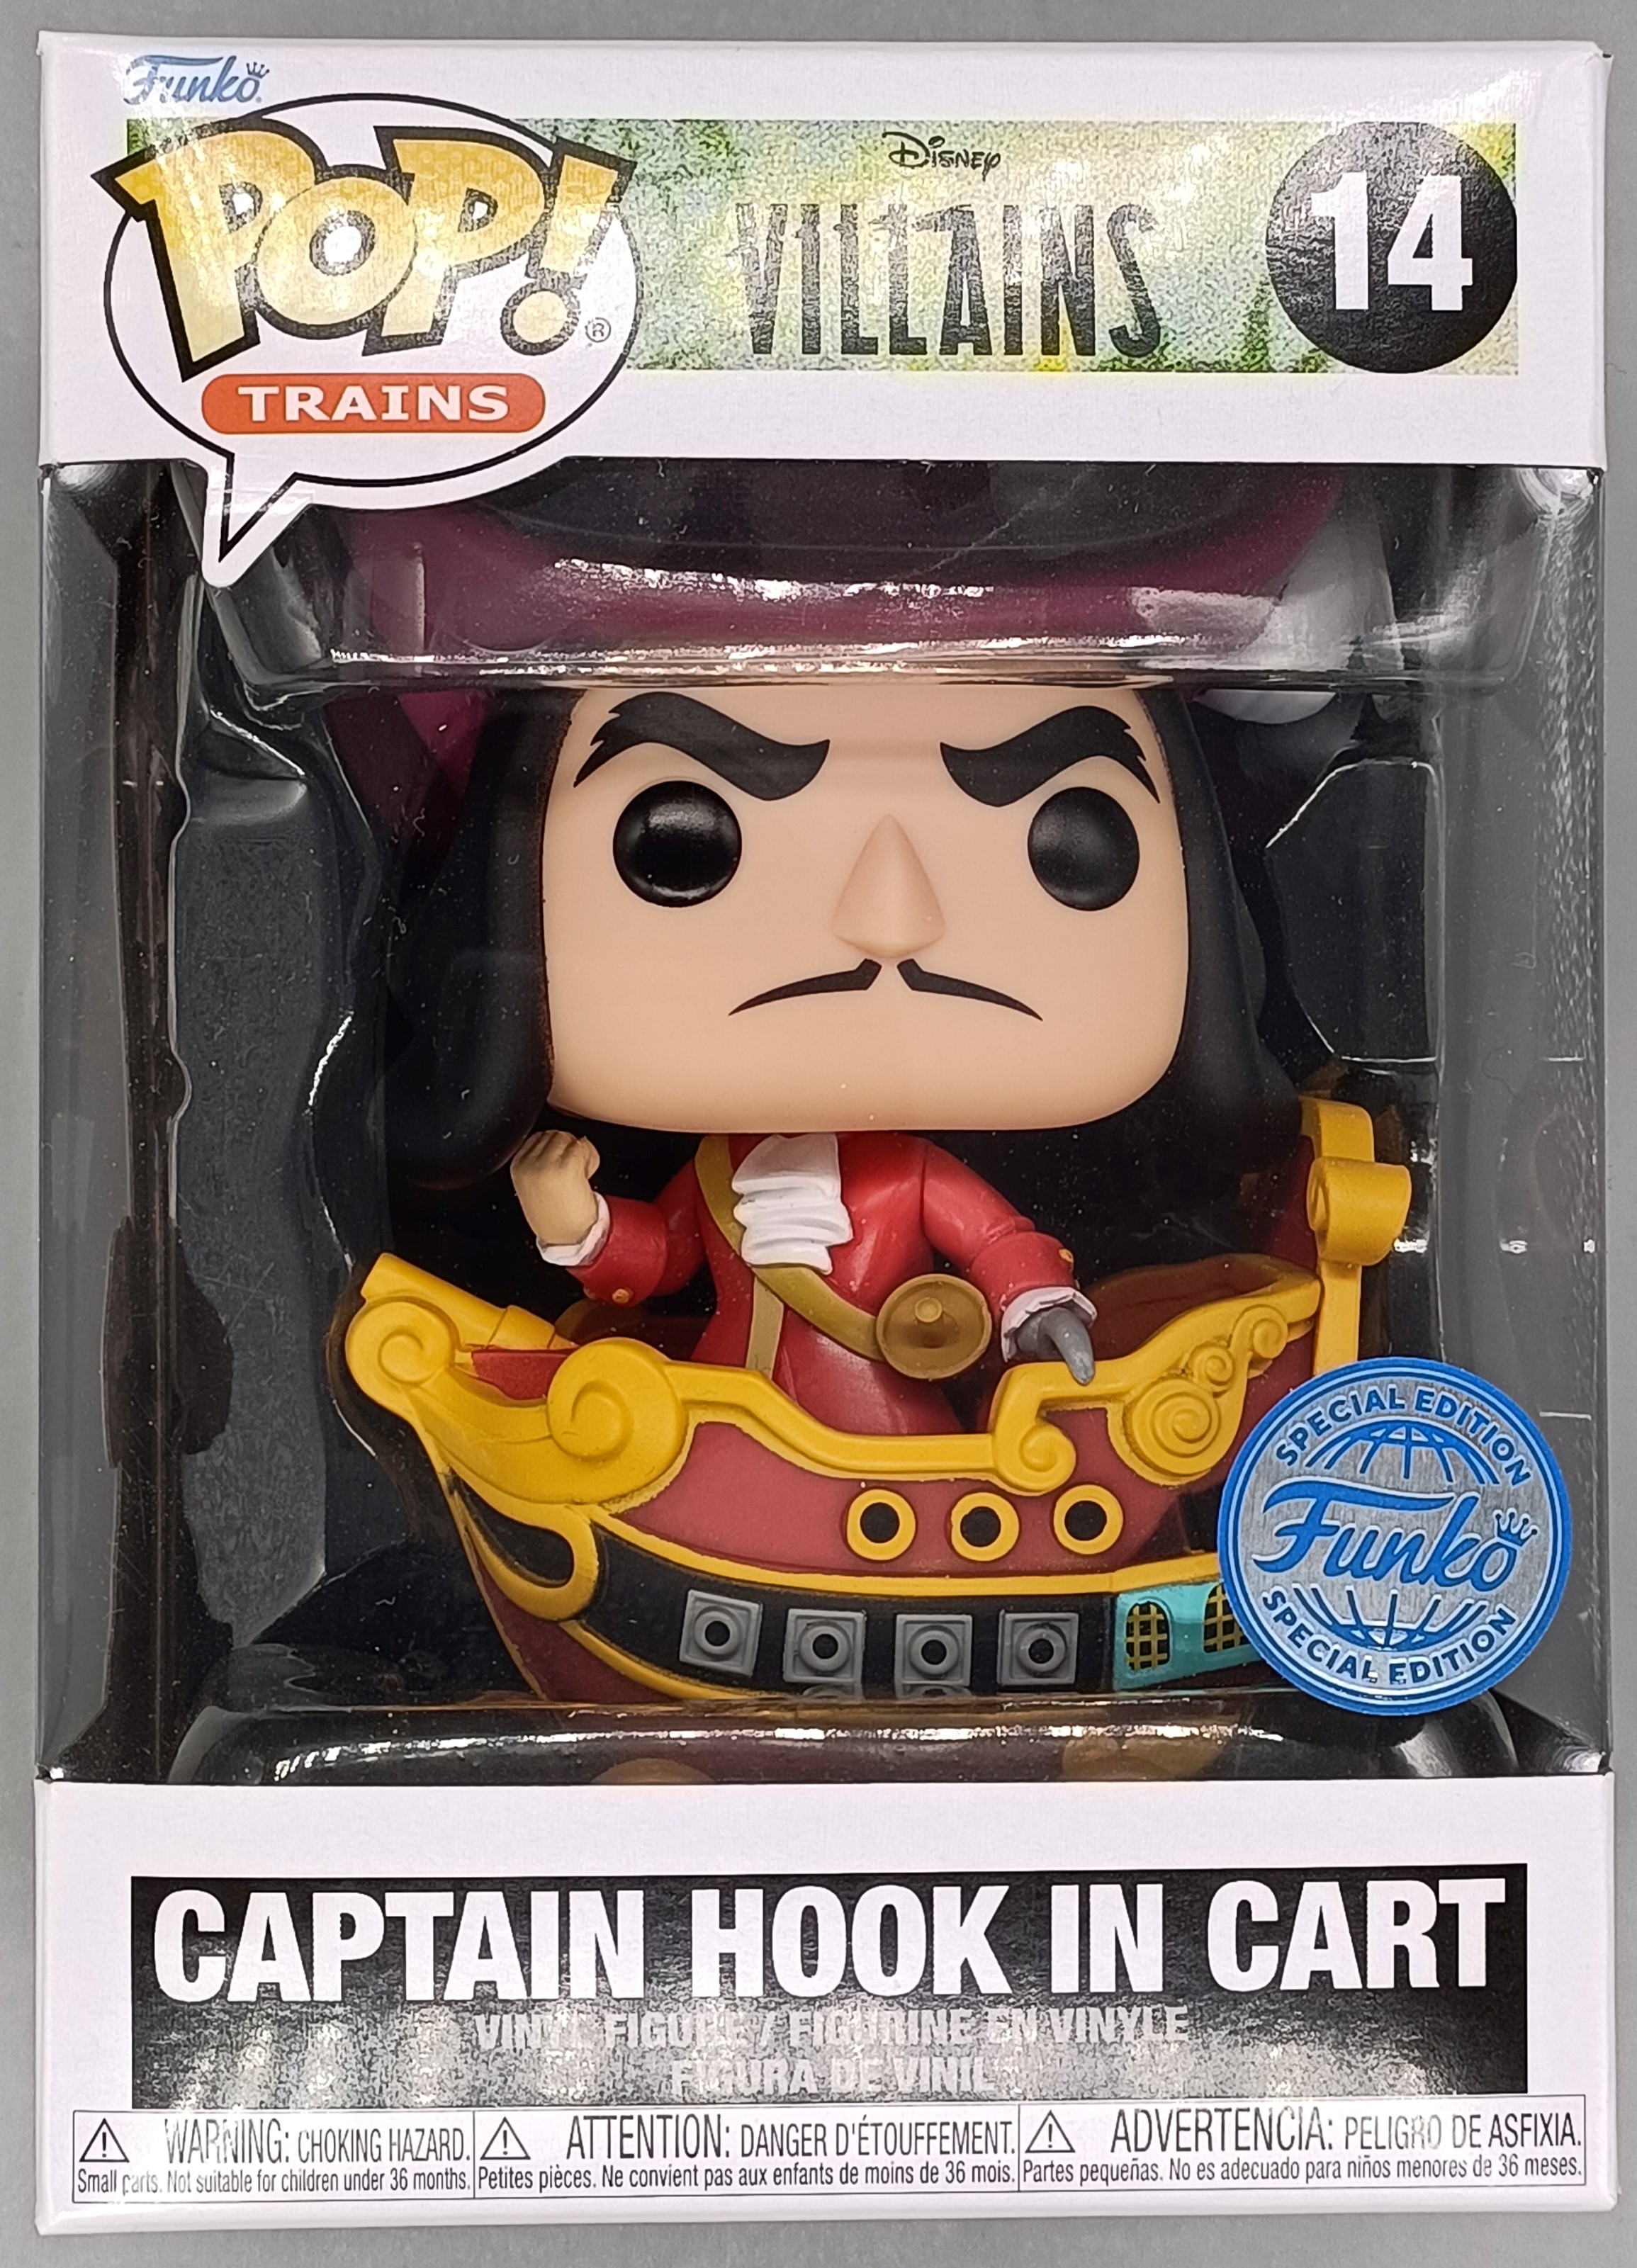 14 Captain Hook in Cart - Trains Disney Villains – Funko Pops